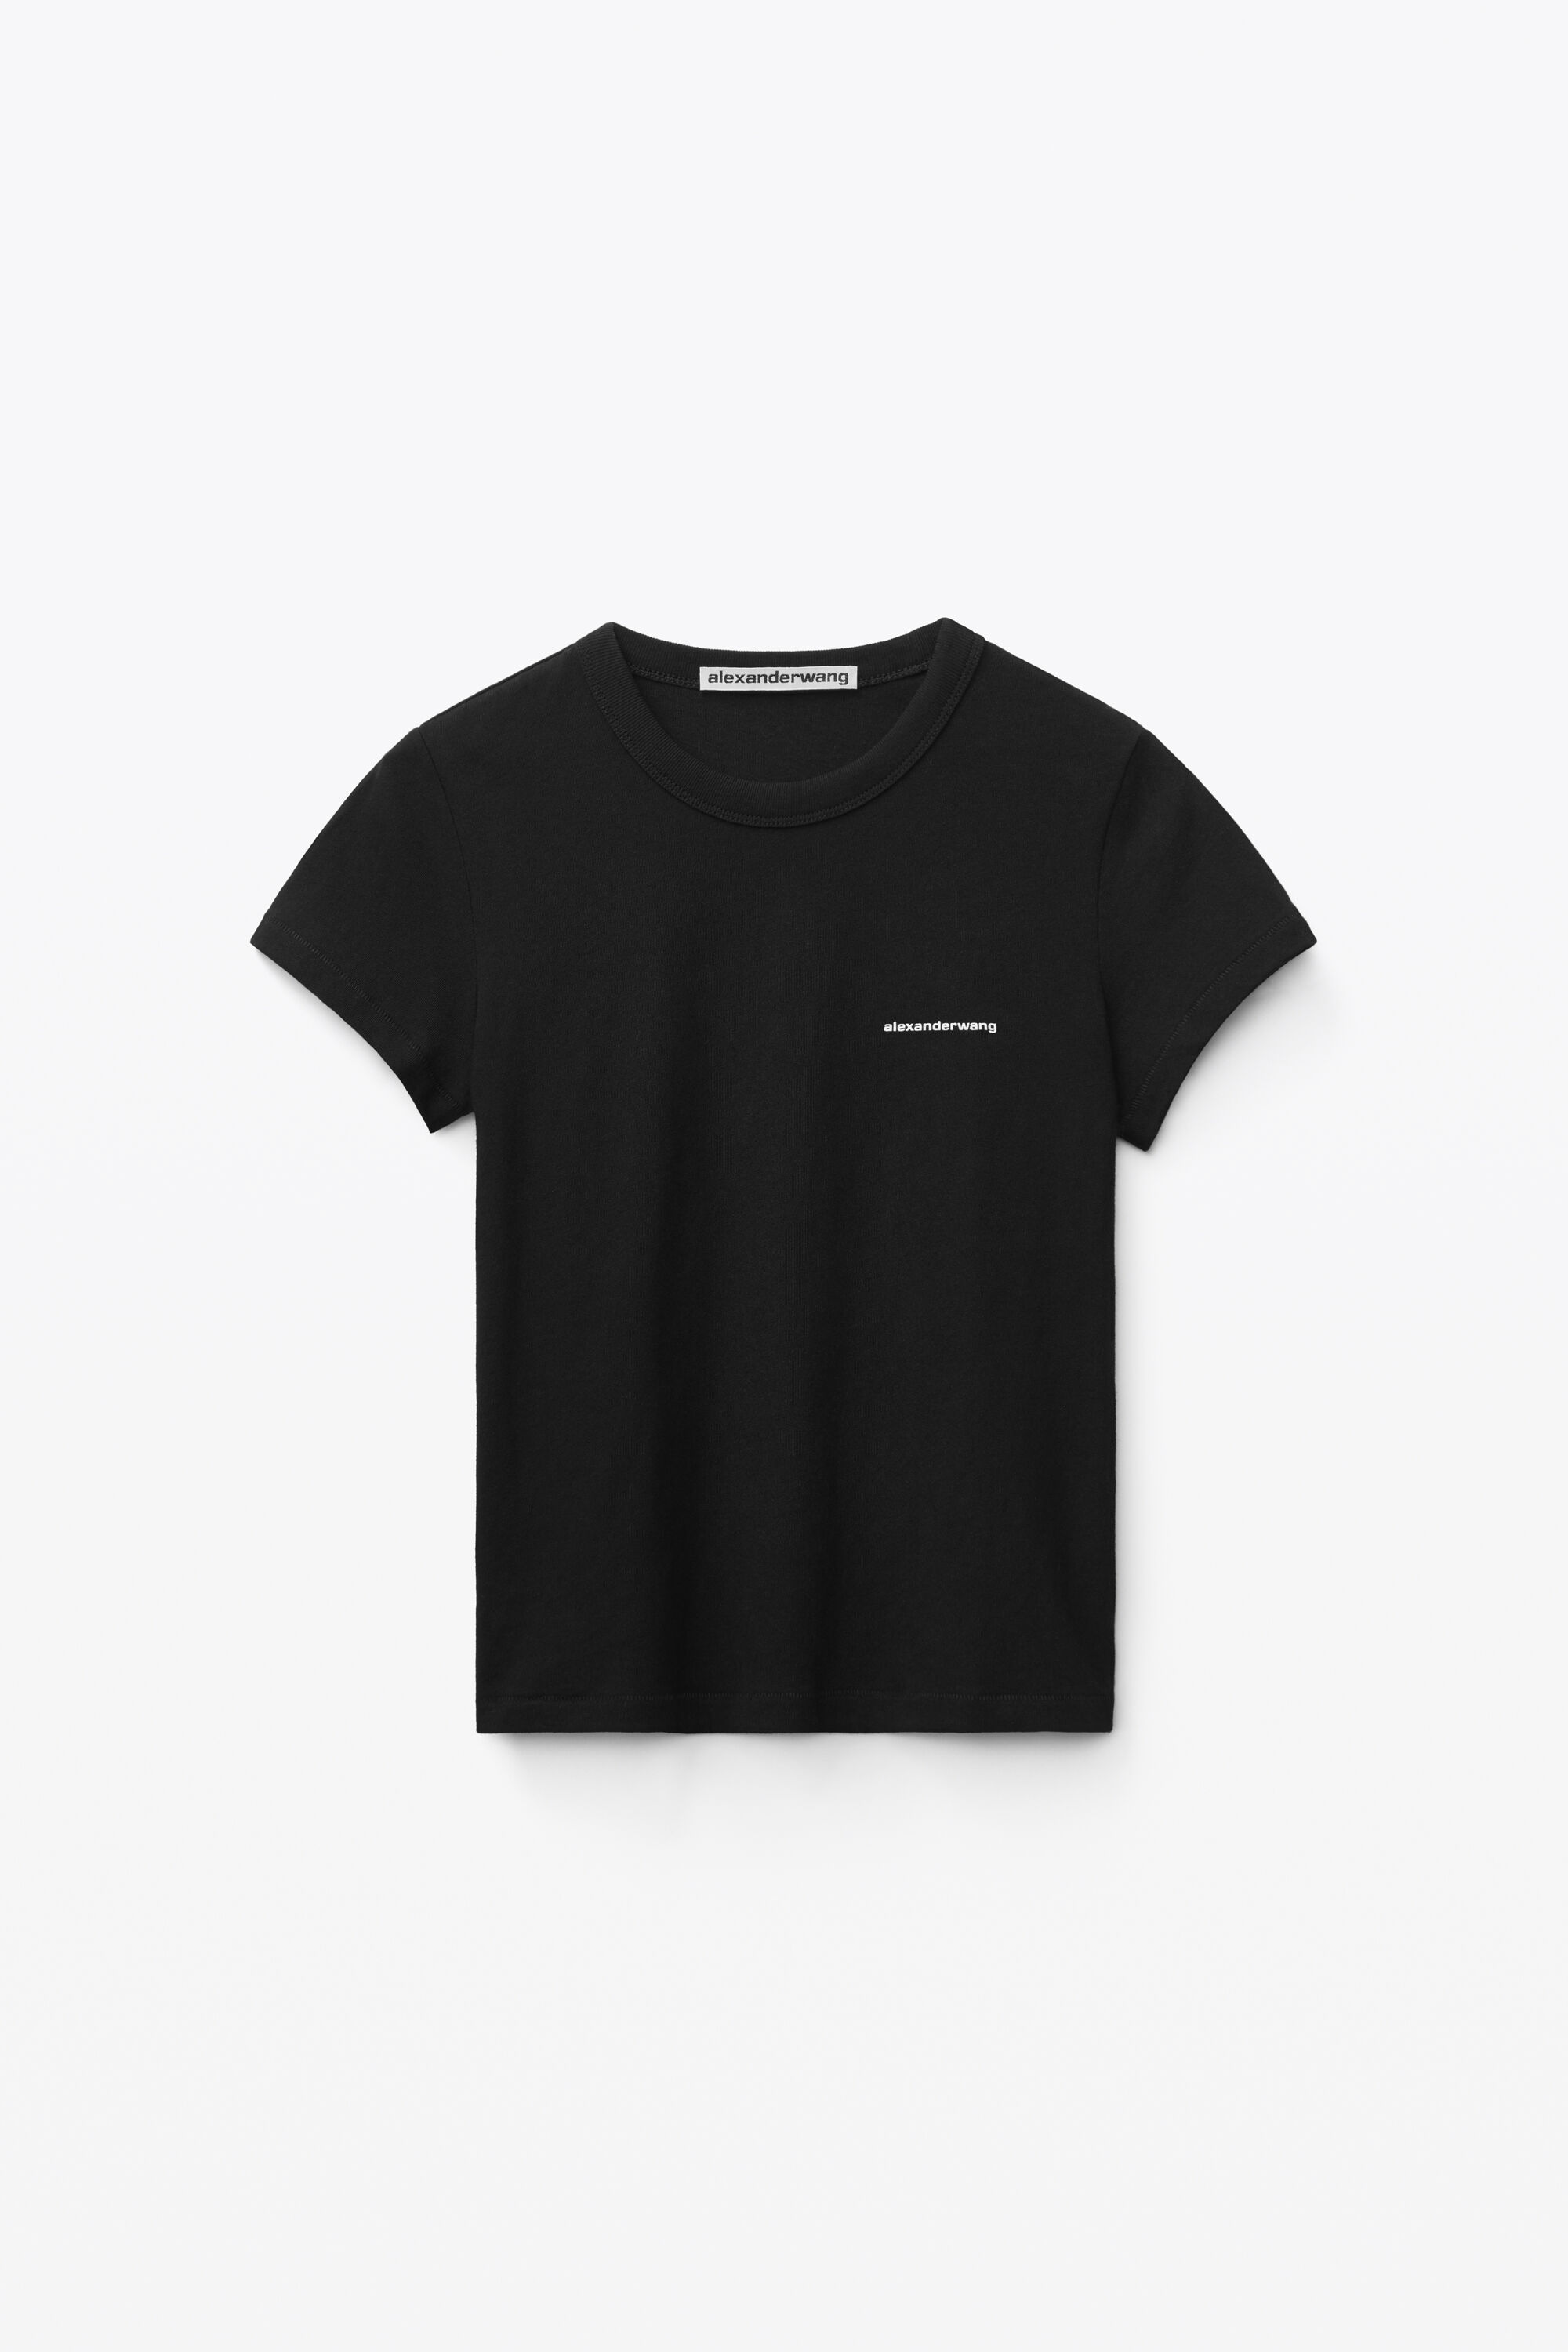 Alexanderwang black T shirt